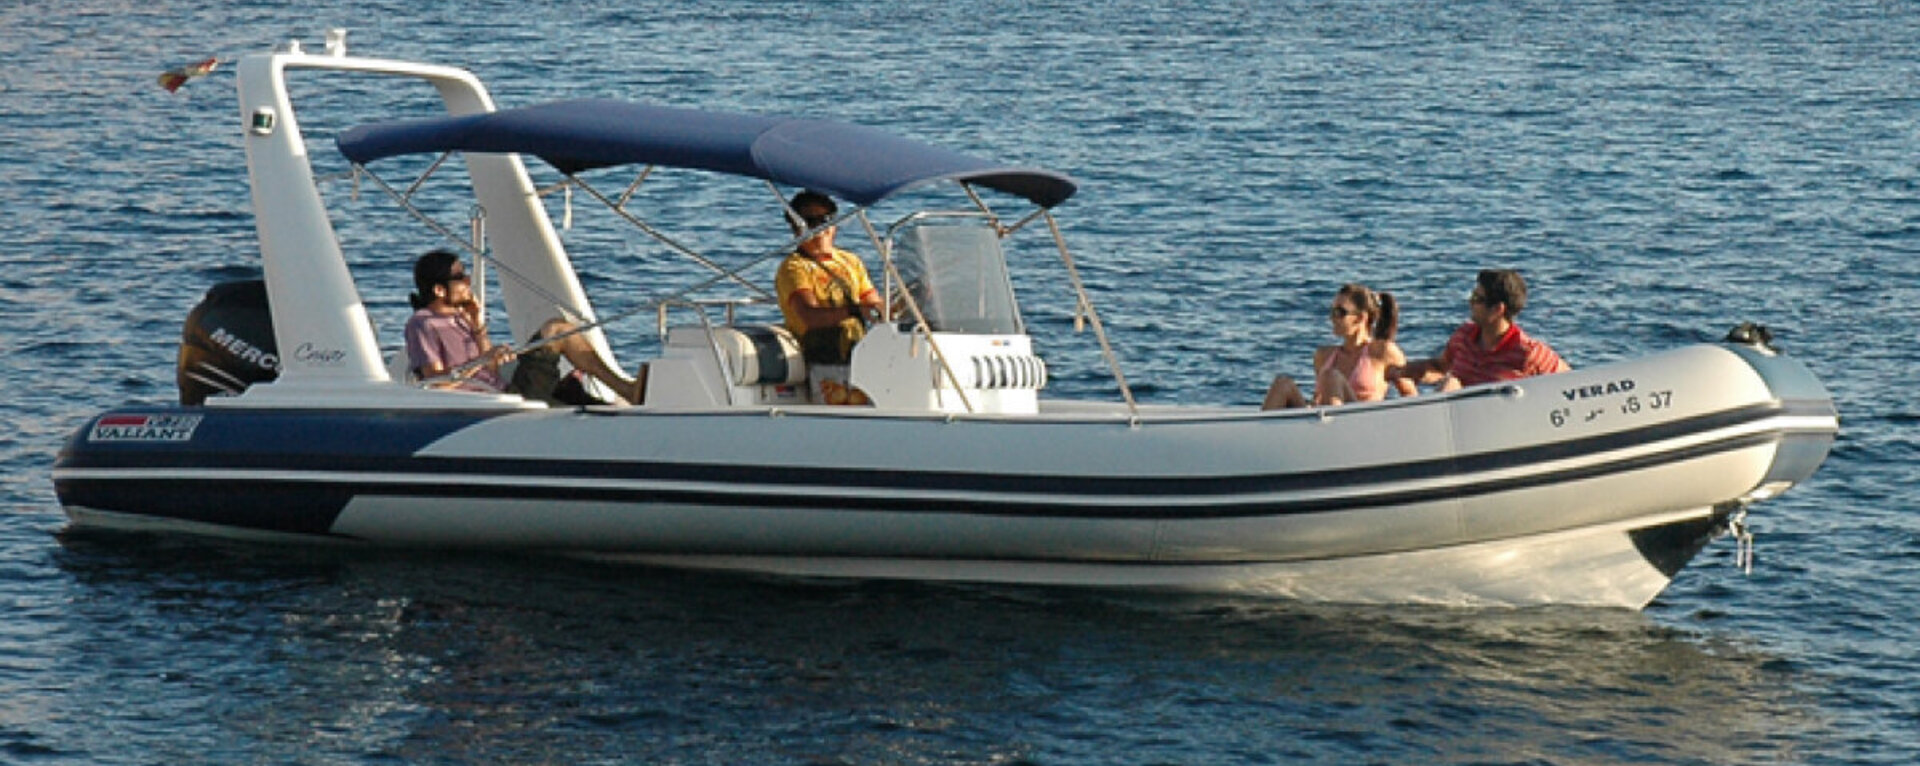 Valiant 750 - La Brise Charter Ibiza